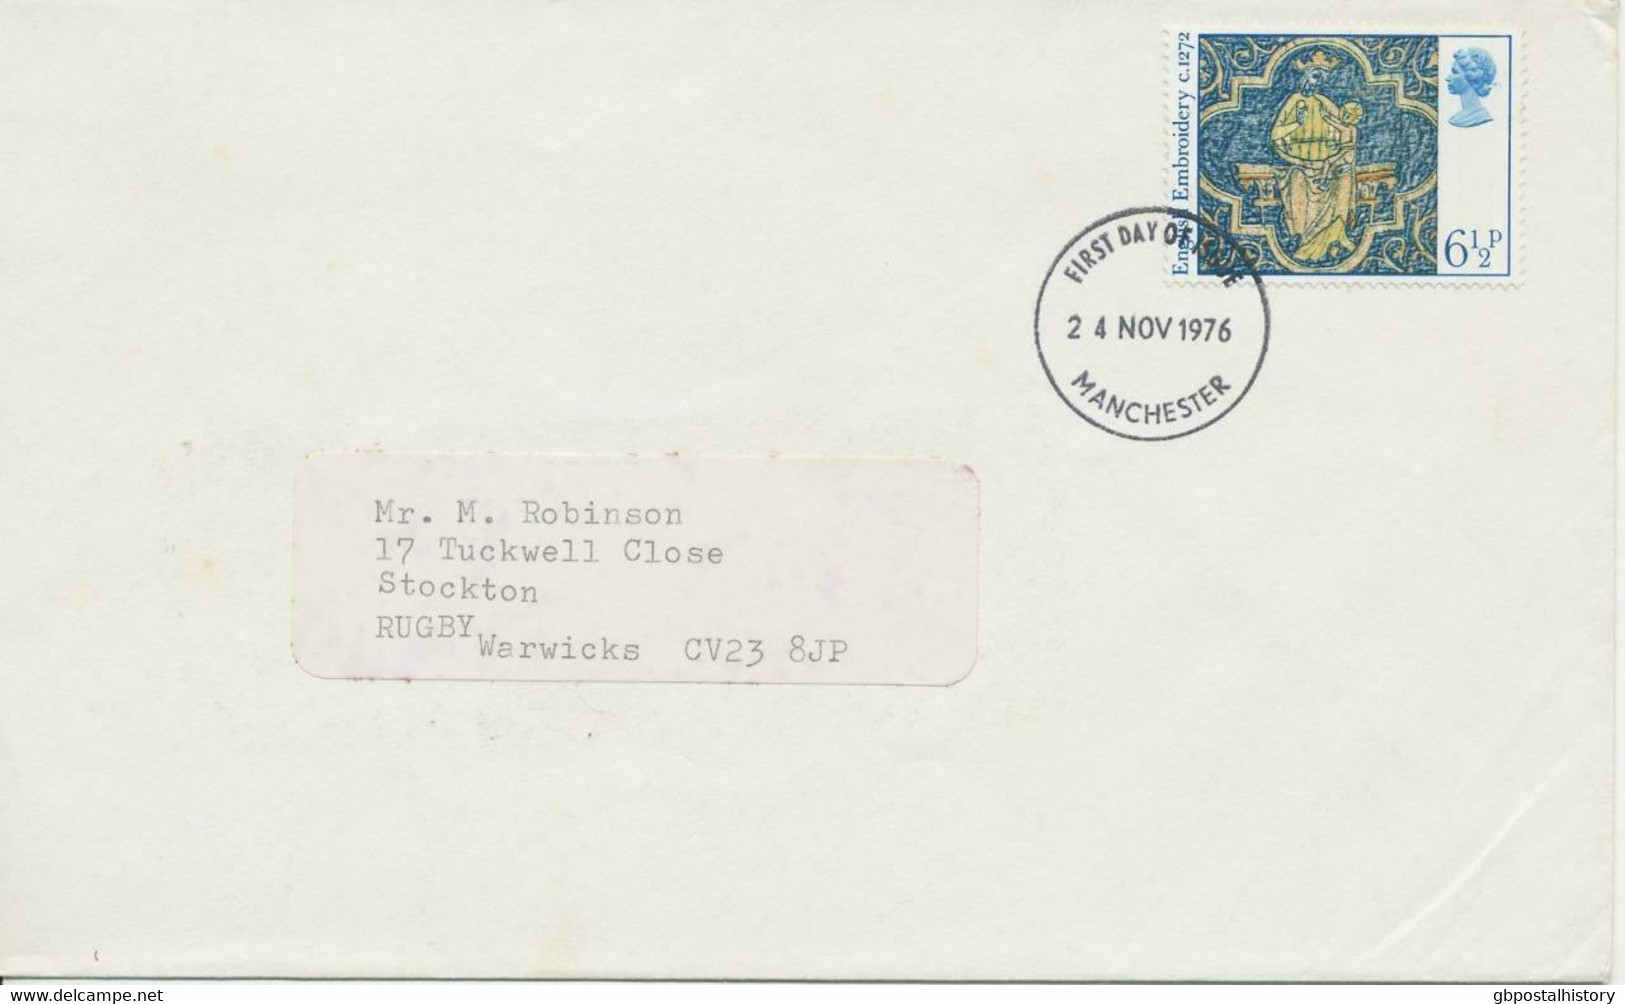 GB 1976, Christmas 6 ½p On Very Fine FDC (envelope Cut At Left) FDI MANCHESTER (SG 1018) - 1971-80 Ediciones Decimal